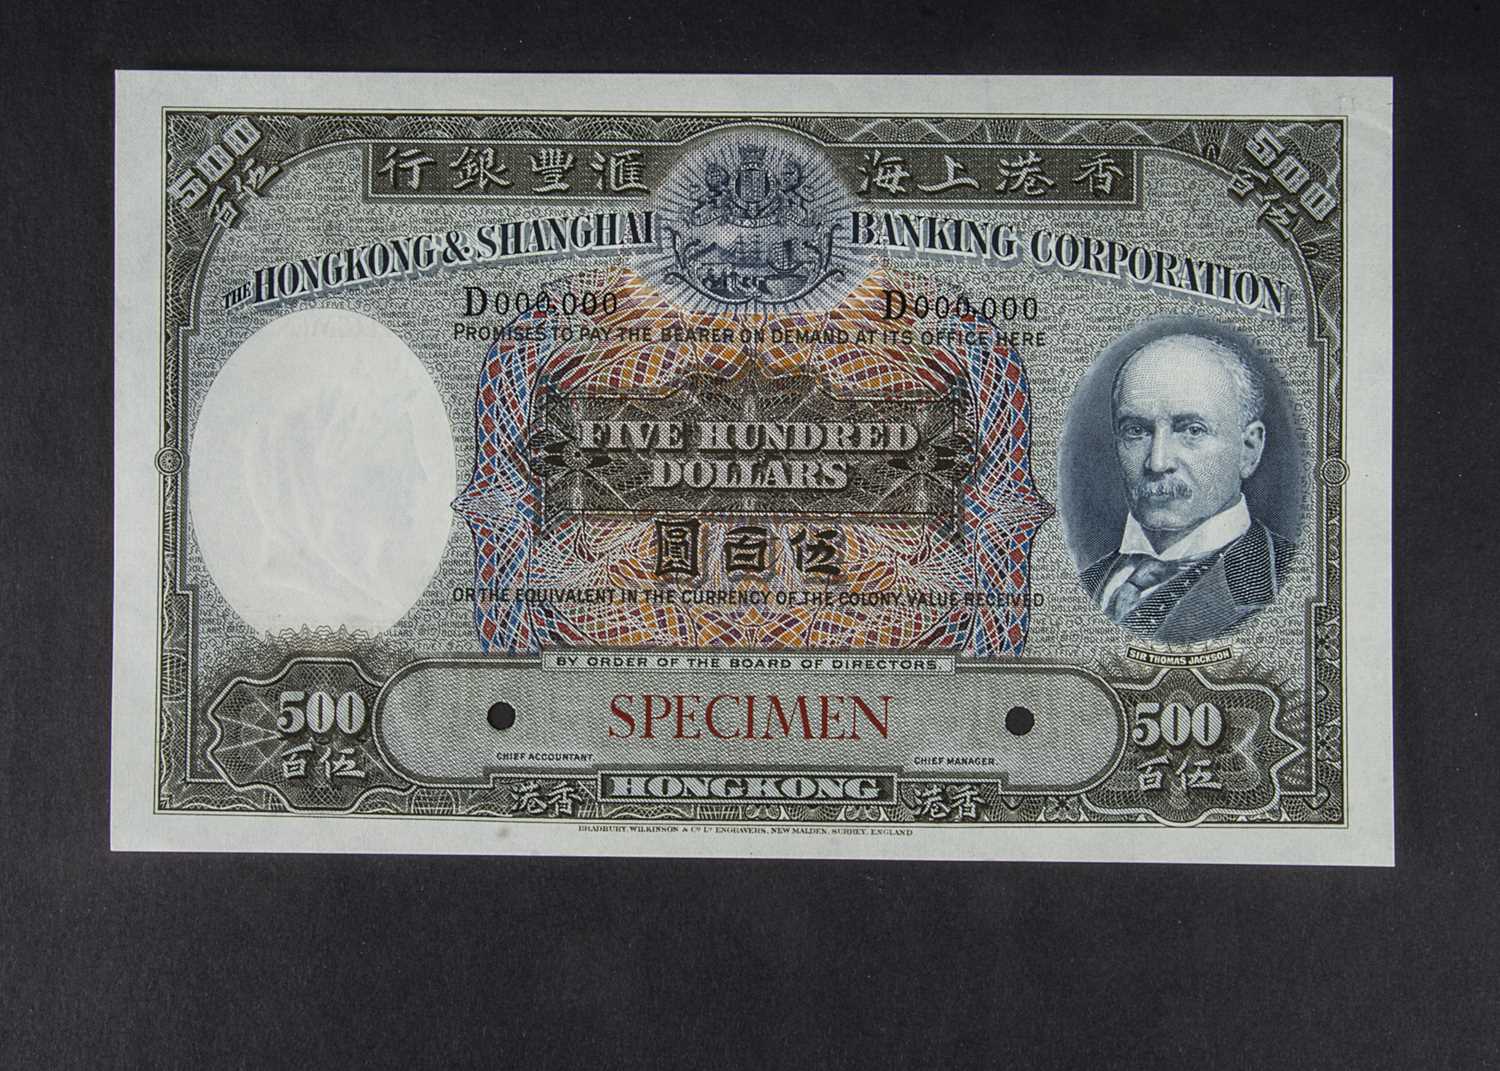 Specimen Bank Note: The Hong Kong and Shanghai Banking Corporation specimen 500 Dollars,